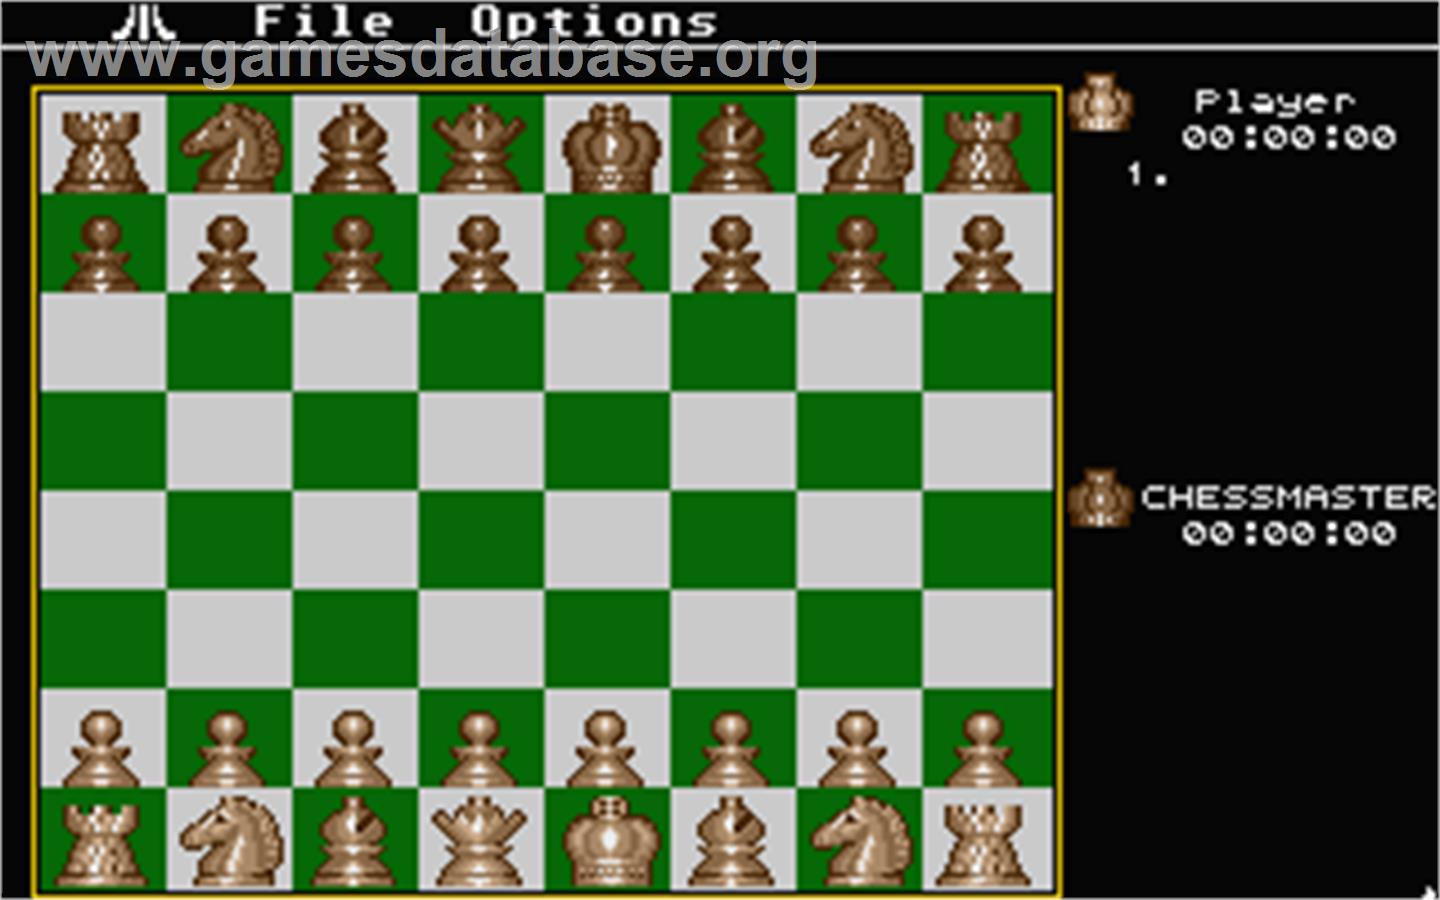 Chessmaster 2000 - Atari ST - Artwork - In Game